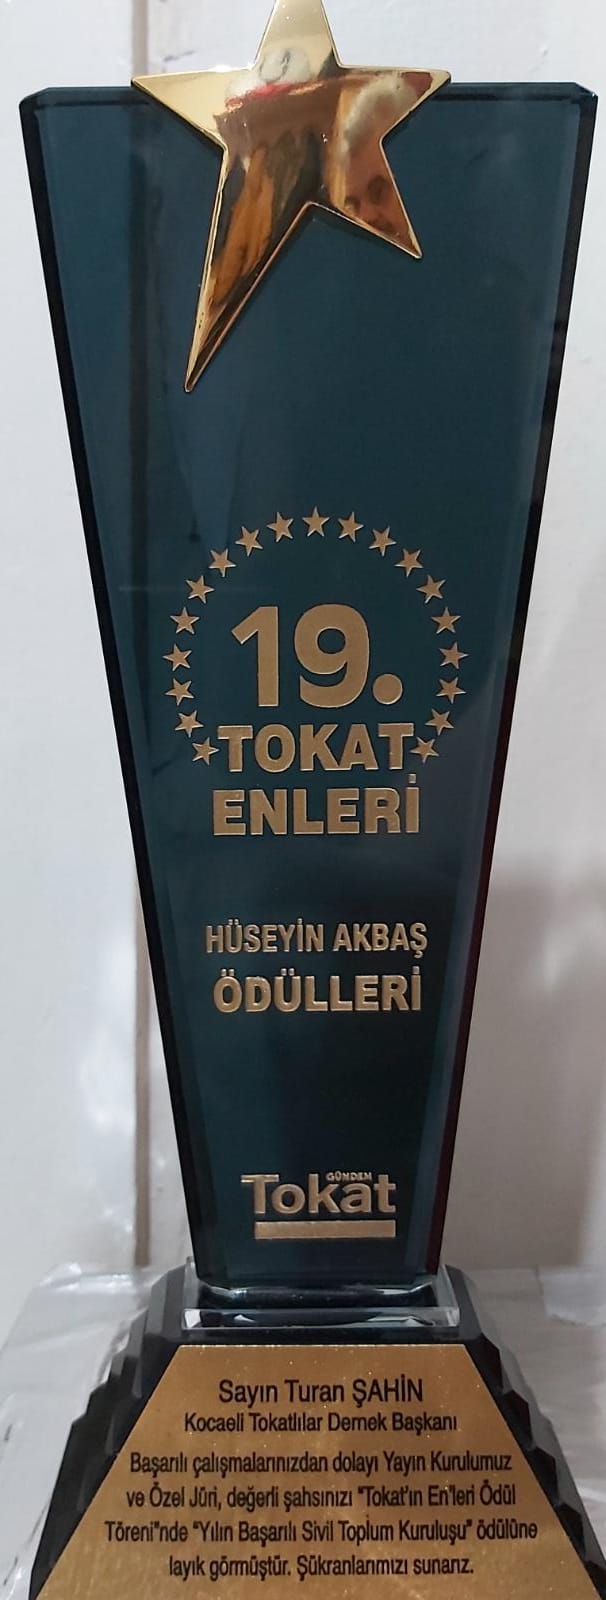 Tokat, Ankara’ya aktı